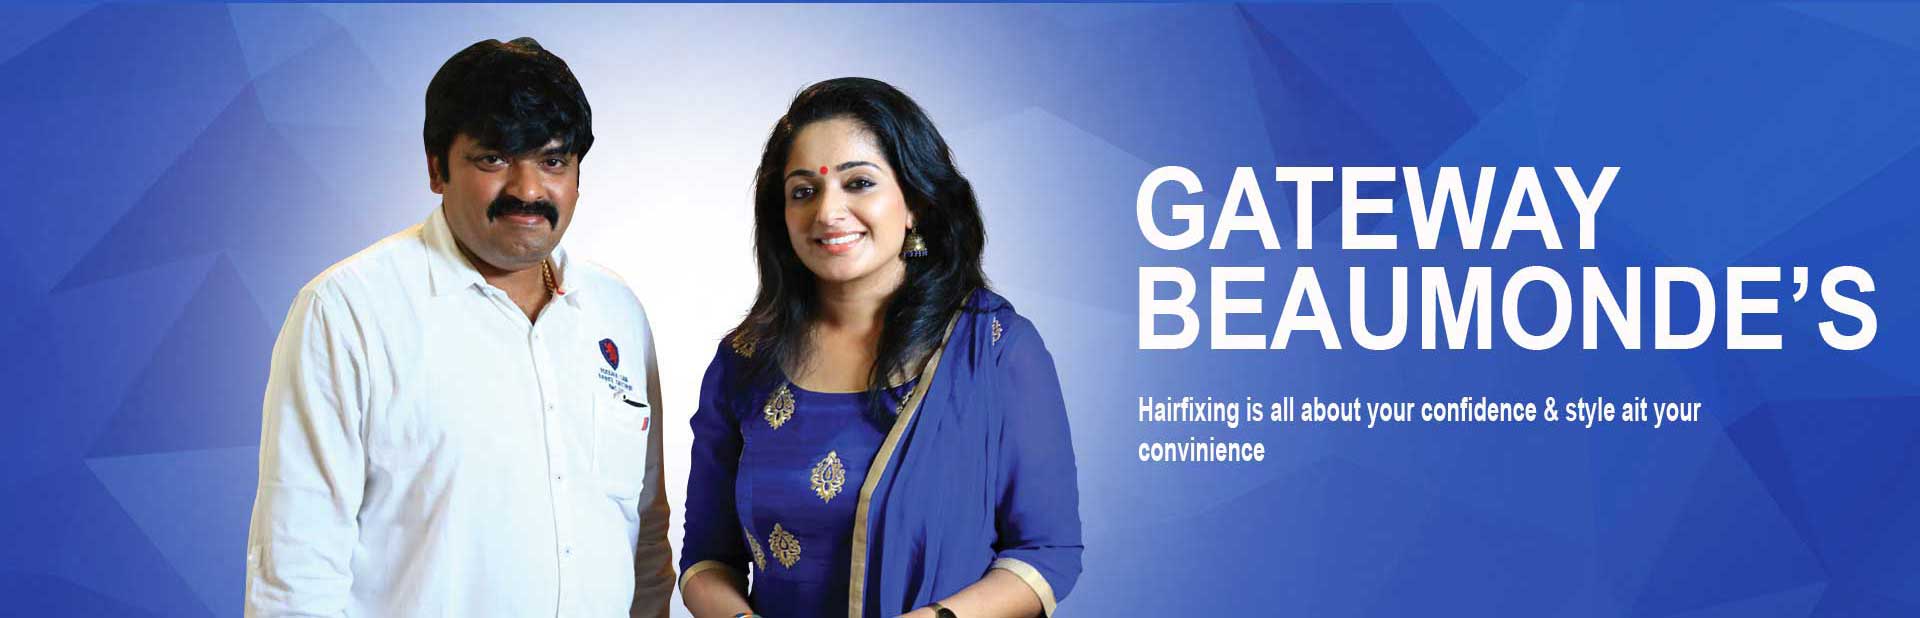 Gateway Beaumondes - Hair Replacement, Hairfixing in Bangalore